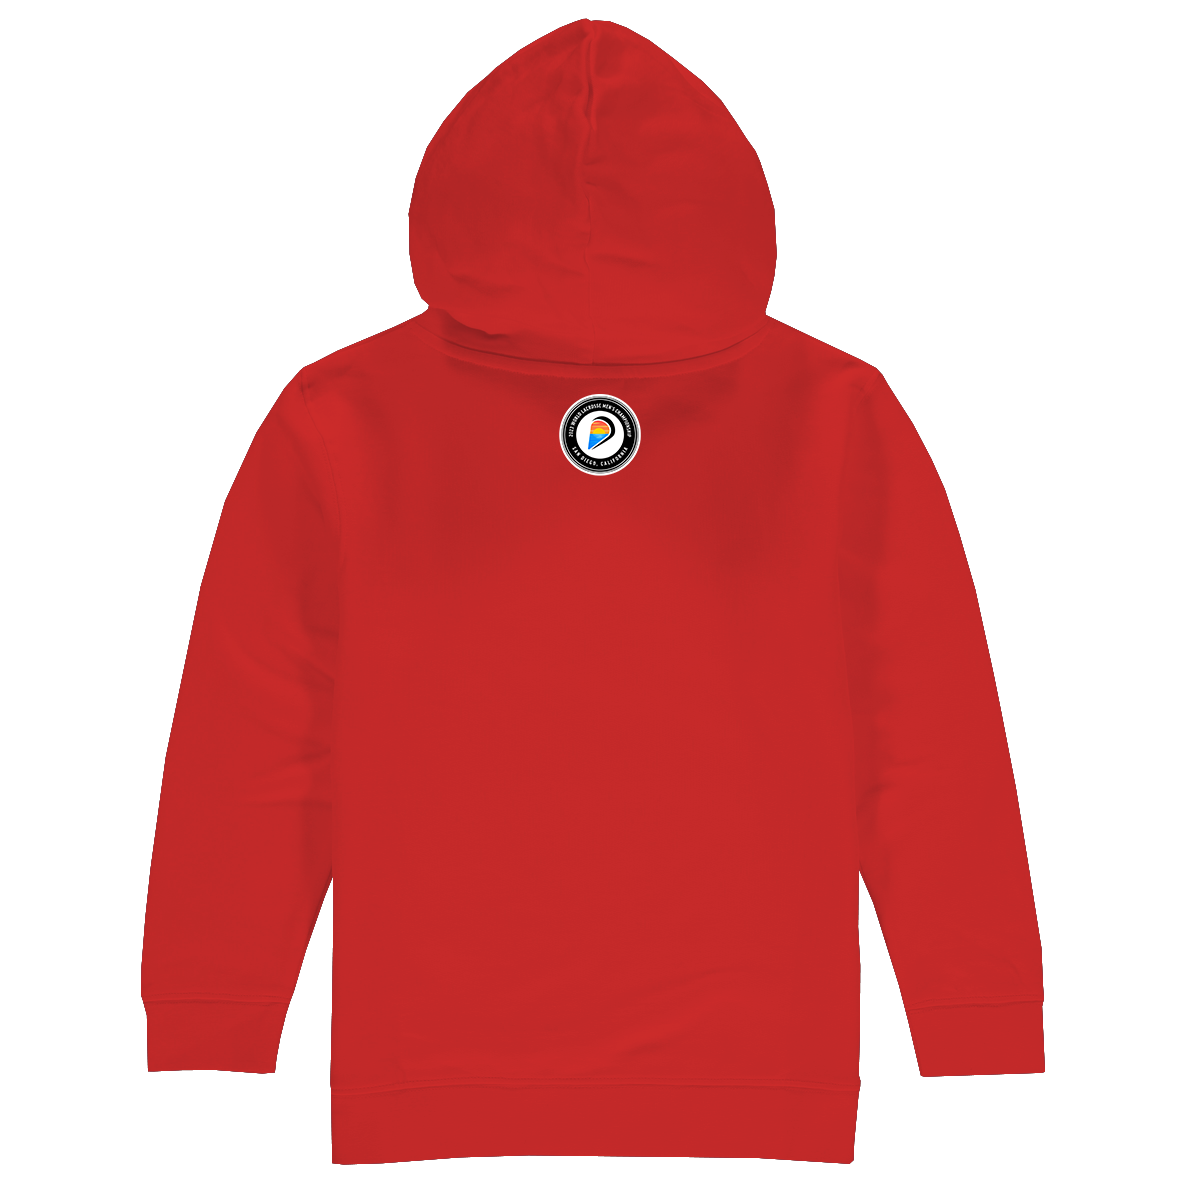 Korea Premium Unisex Hoodie Sweatshirt Red